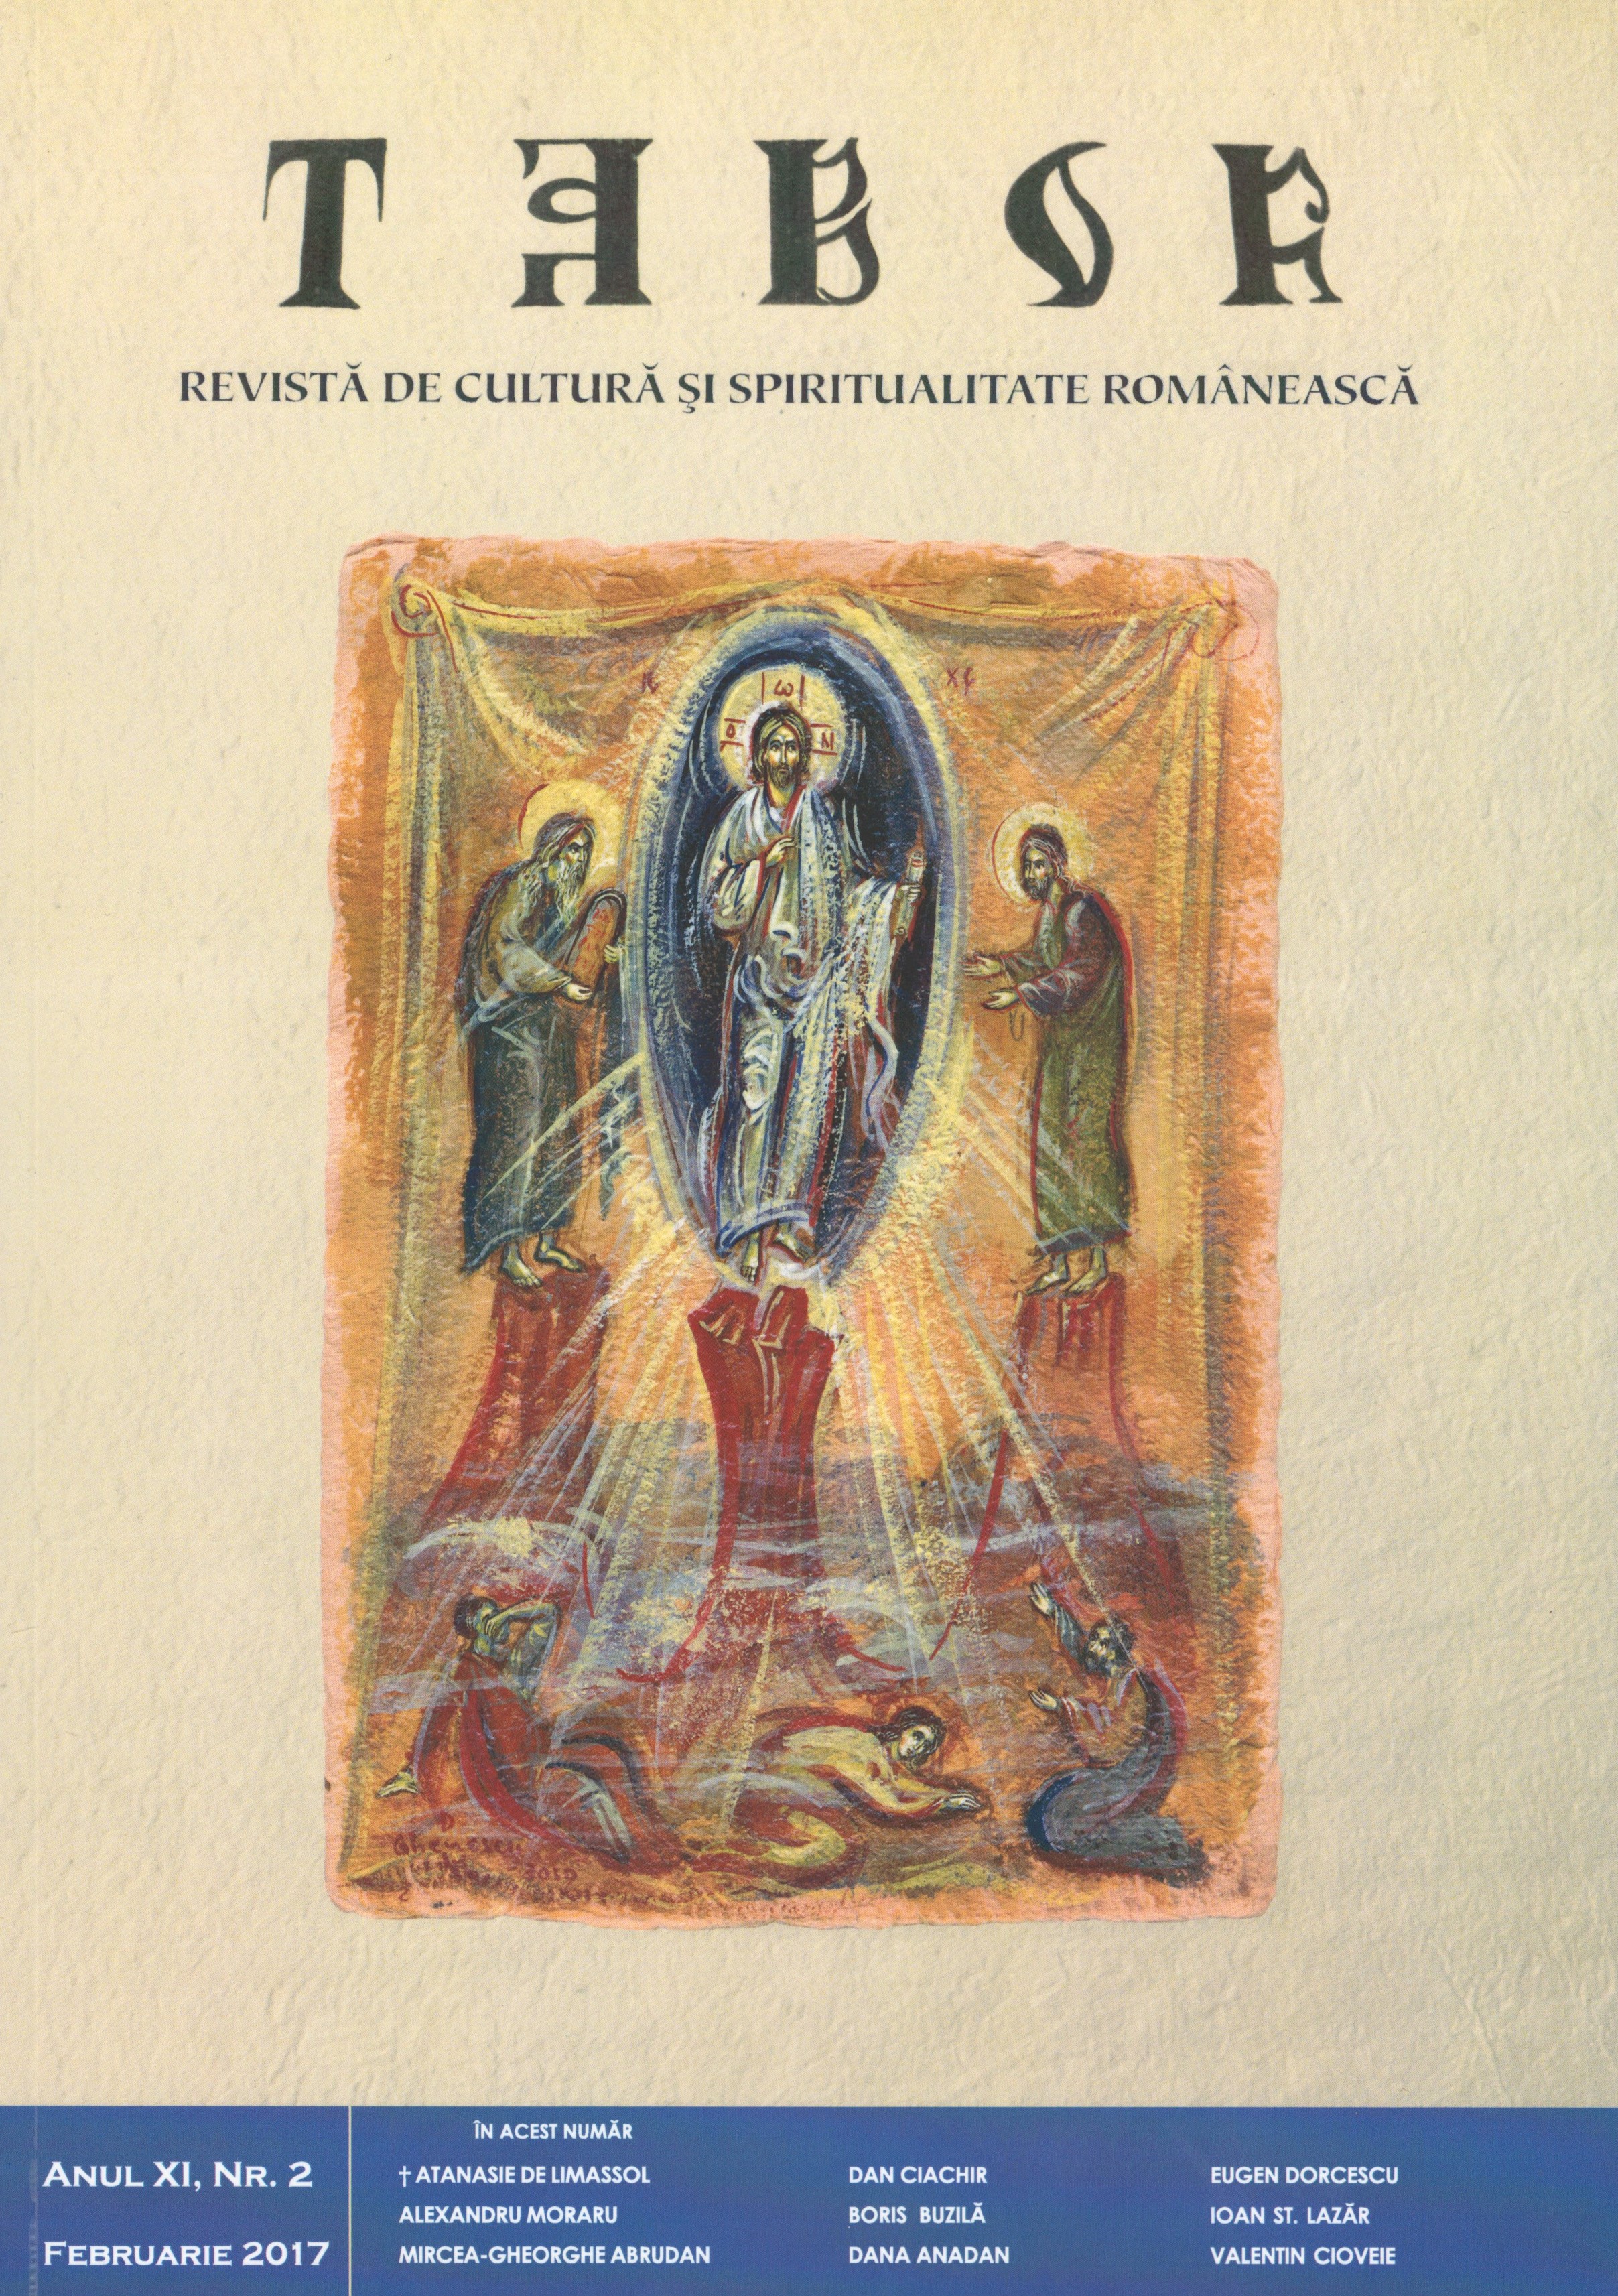 The anniversary of the Romanian Cenacle “Mircea Eliade” in Denver, Colorado Cover Image